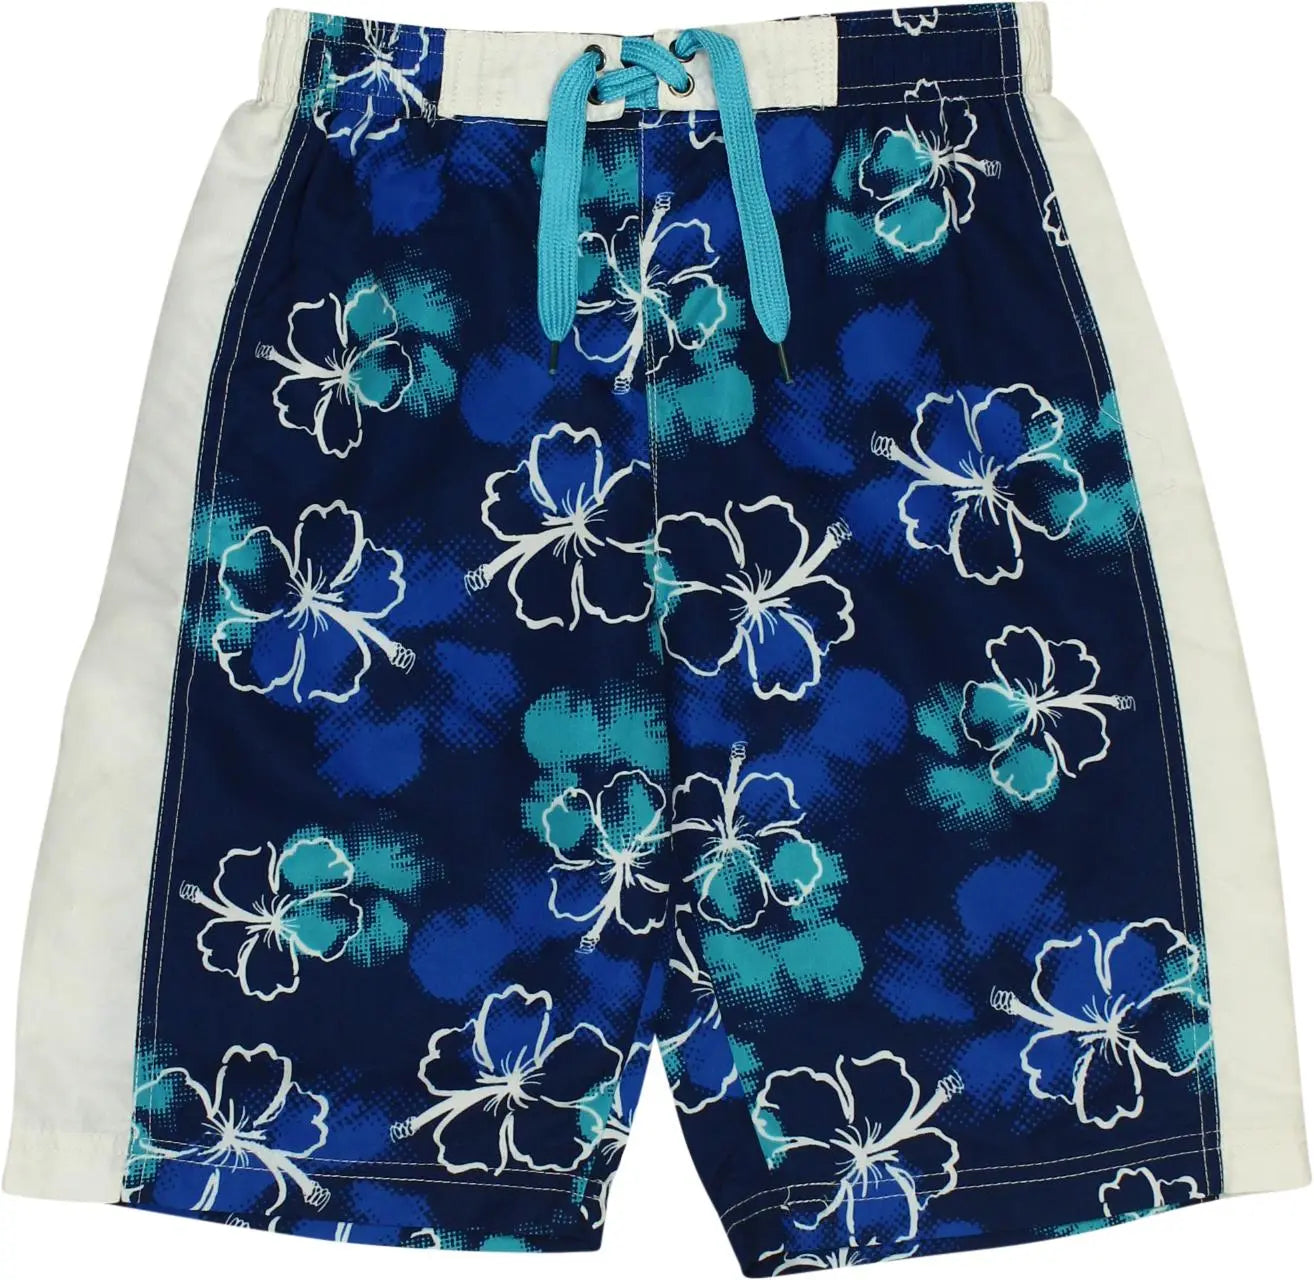 Zeeman - Swim Shorts- ThriftTale.com - Vintage and second handclothing